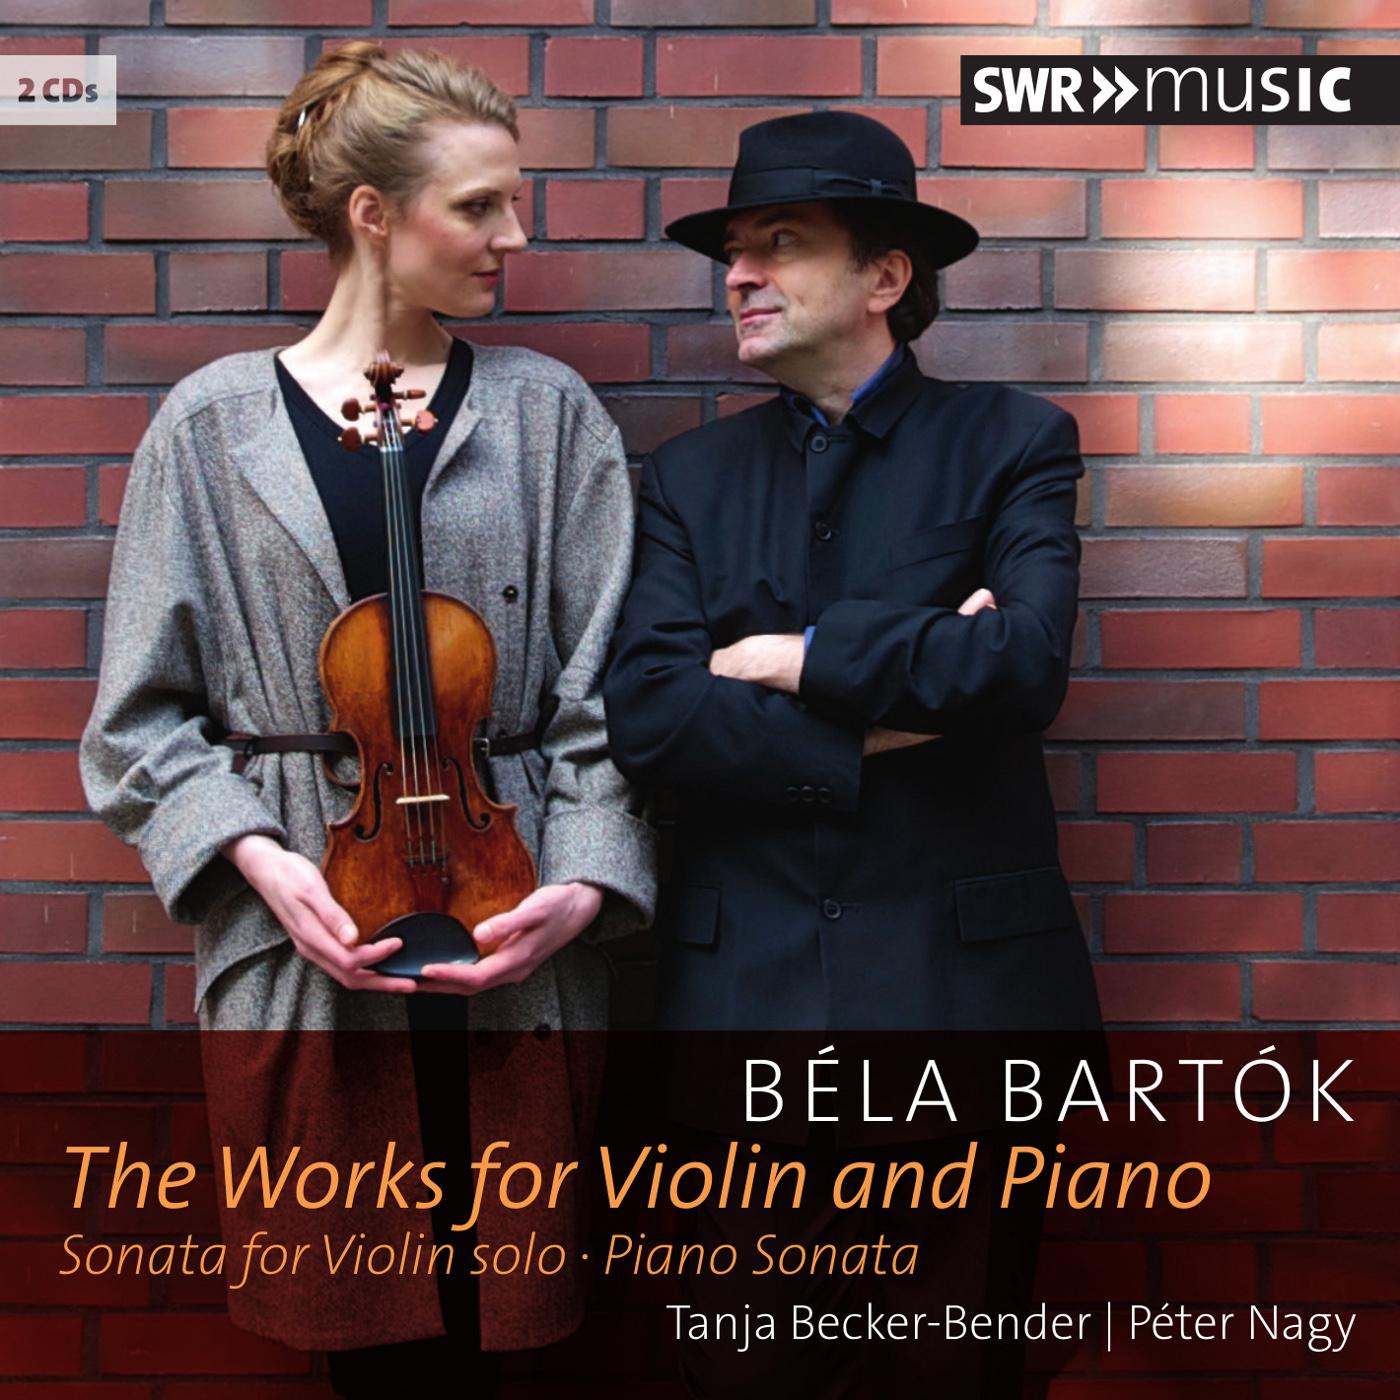 Tanja Becker-Bender - Violin Sonata No. 1, BB 84:III. Allegro